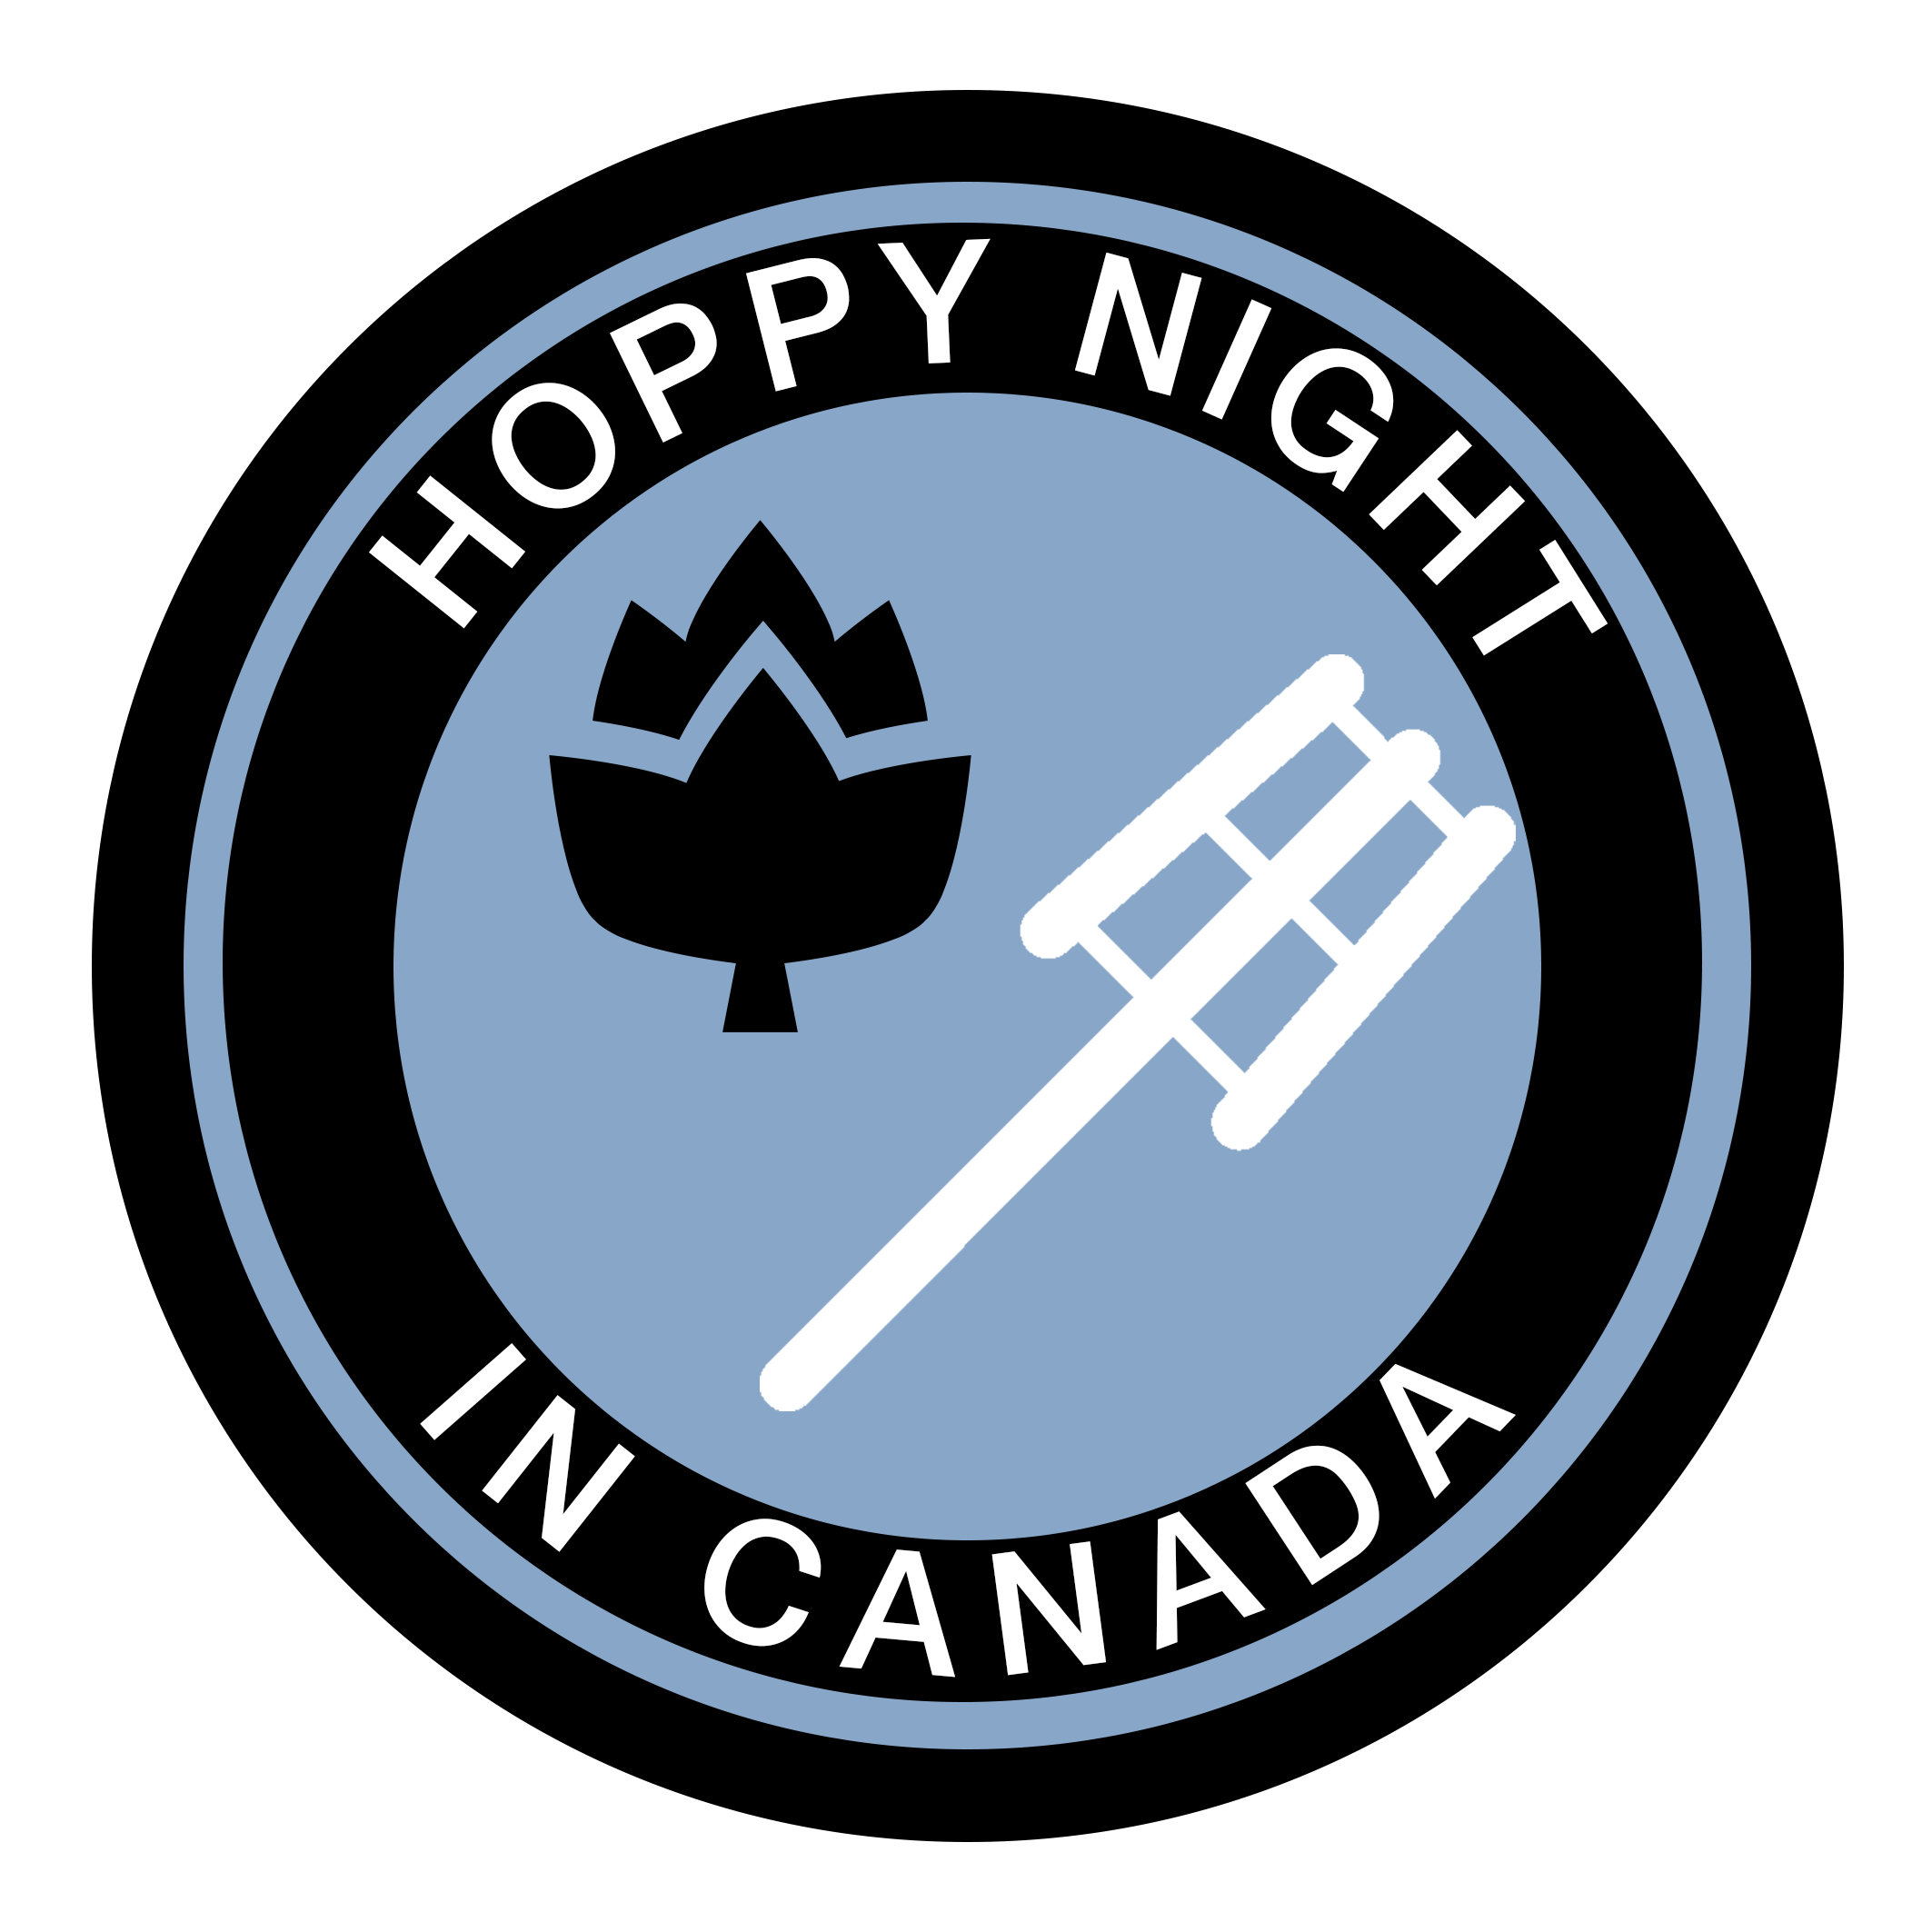 Hoppy Night in Canada